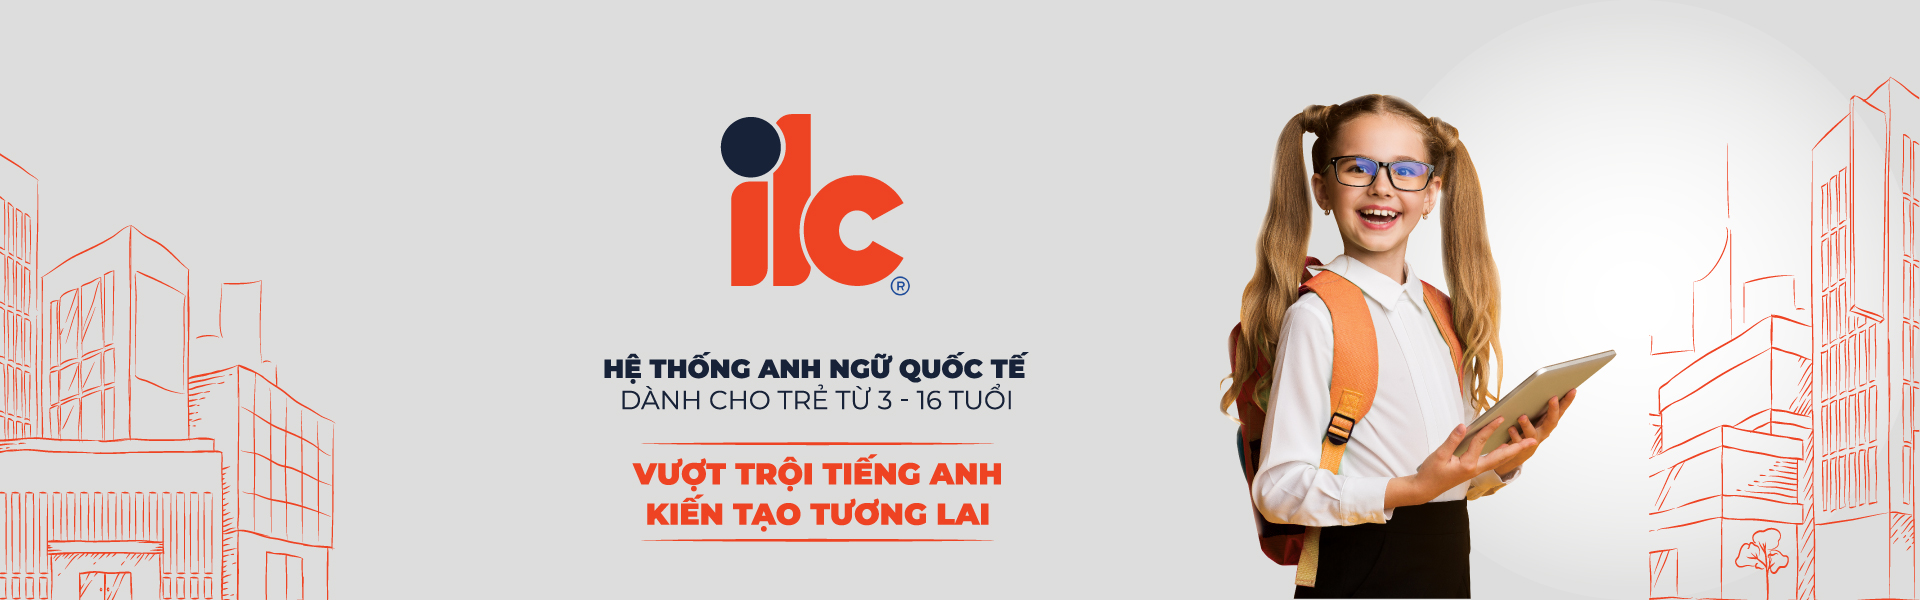 Vì sao chọn ILC